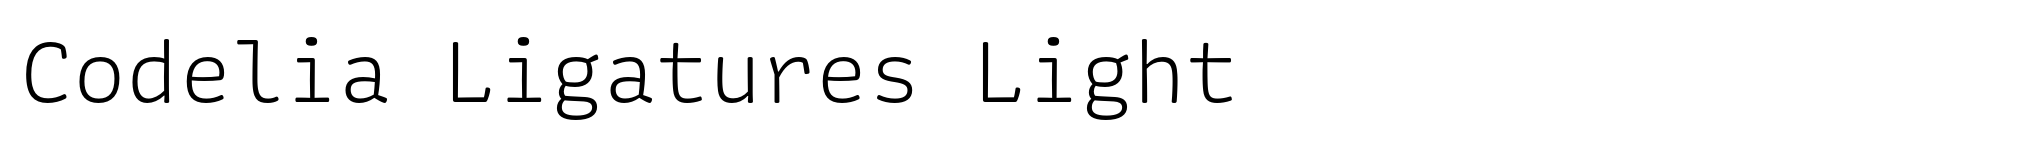 Codelia Ligatures Light image